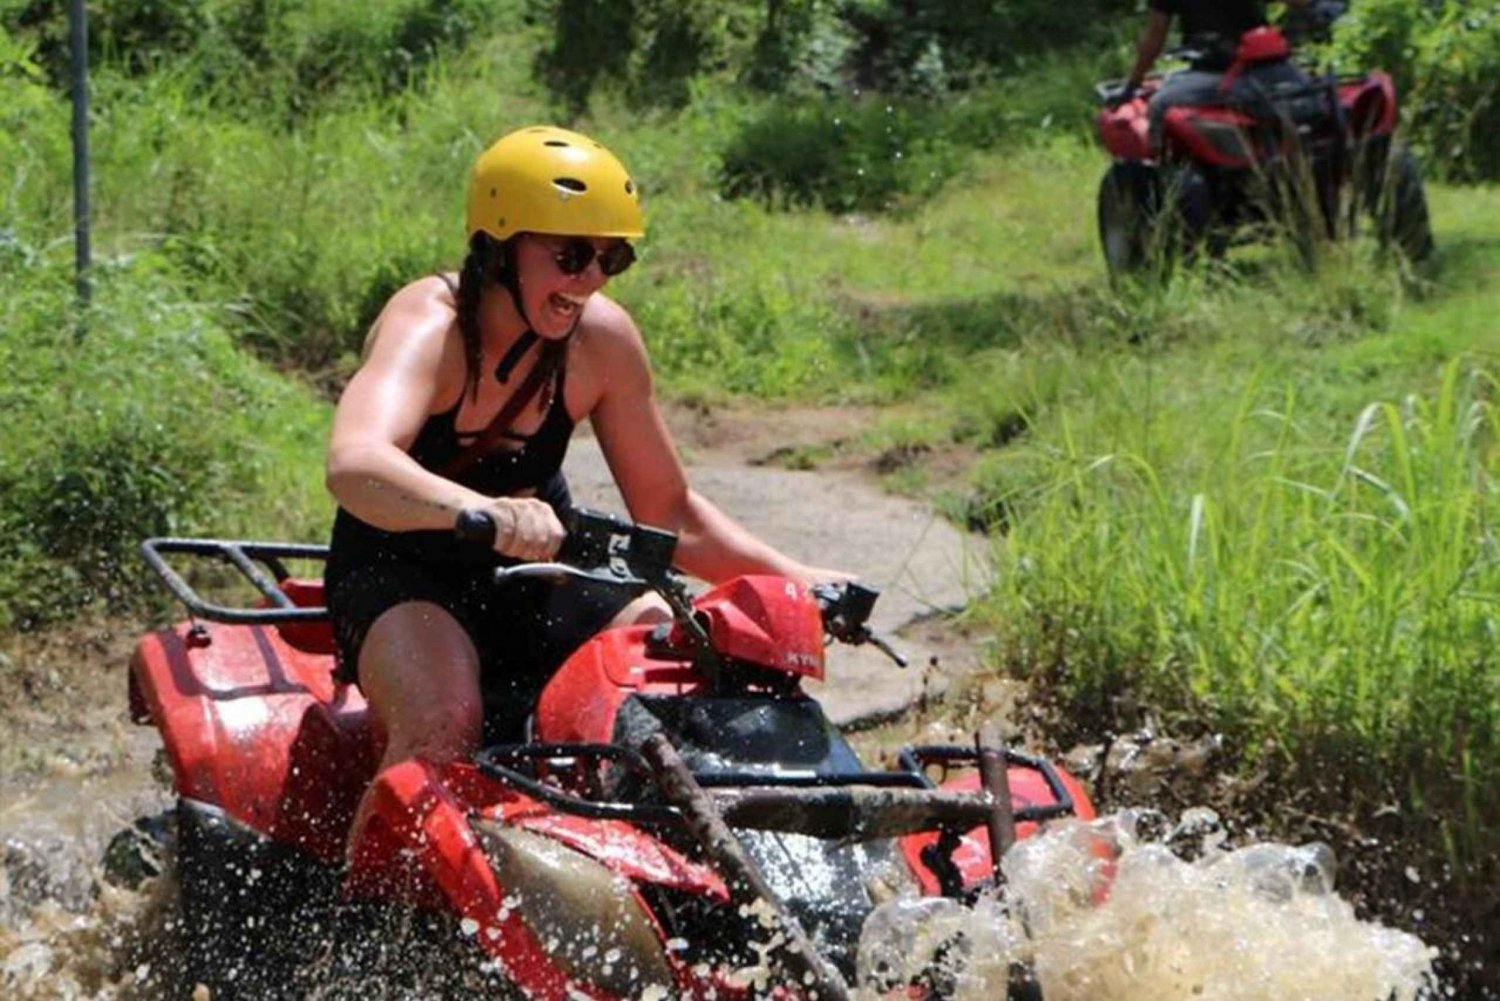 Ubud: Adventure Experience With ATV on Muddy Roads